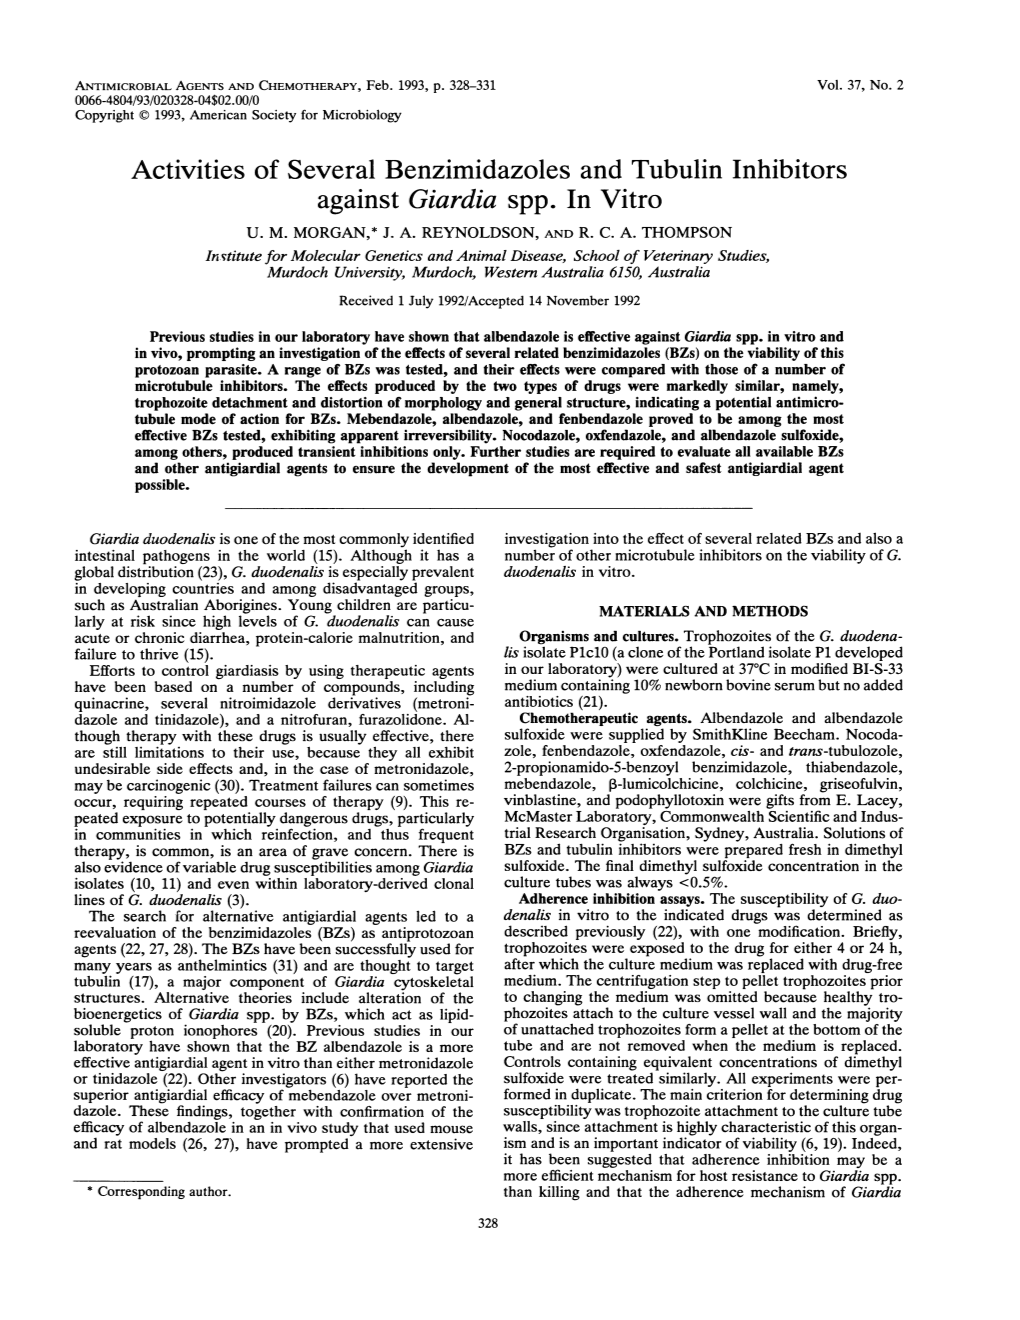 Activities of Several Benzimidazoles and Tubulin Inhibitors Against Giardia Spp. in Vitro U